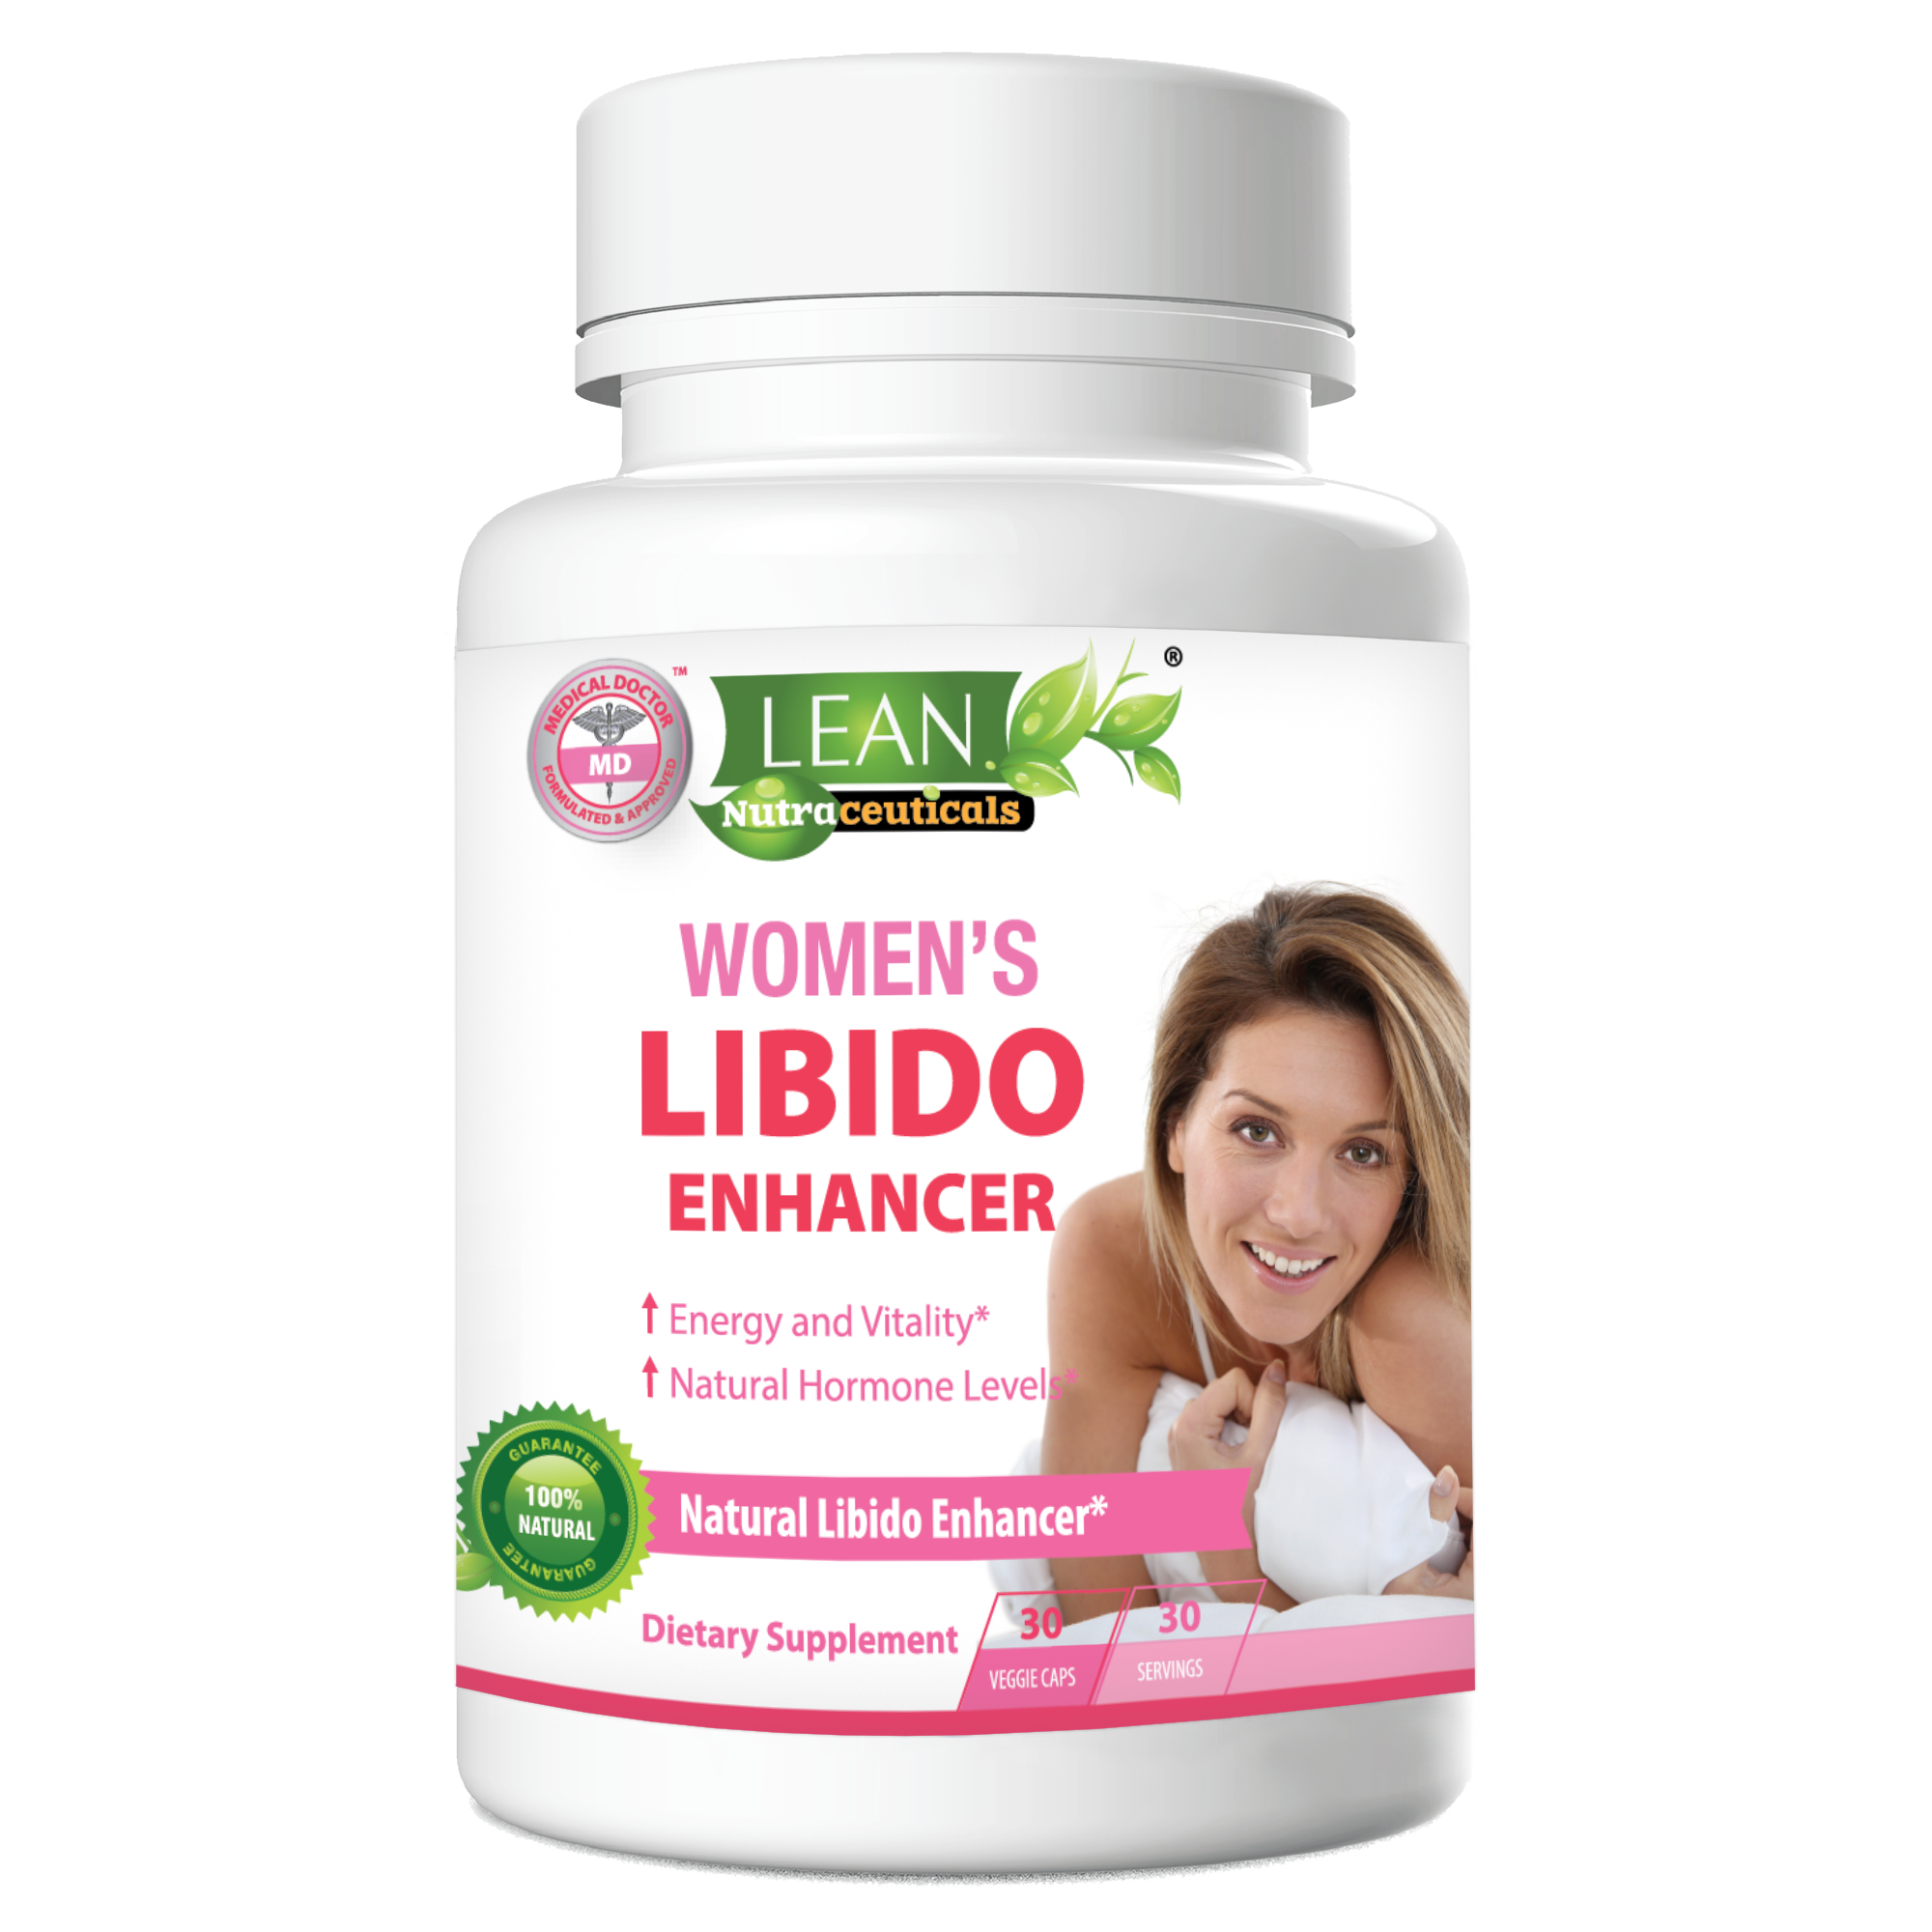 Lean Nutraceuticals Women's Libido Enhancer Supplement Bottle Front